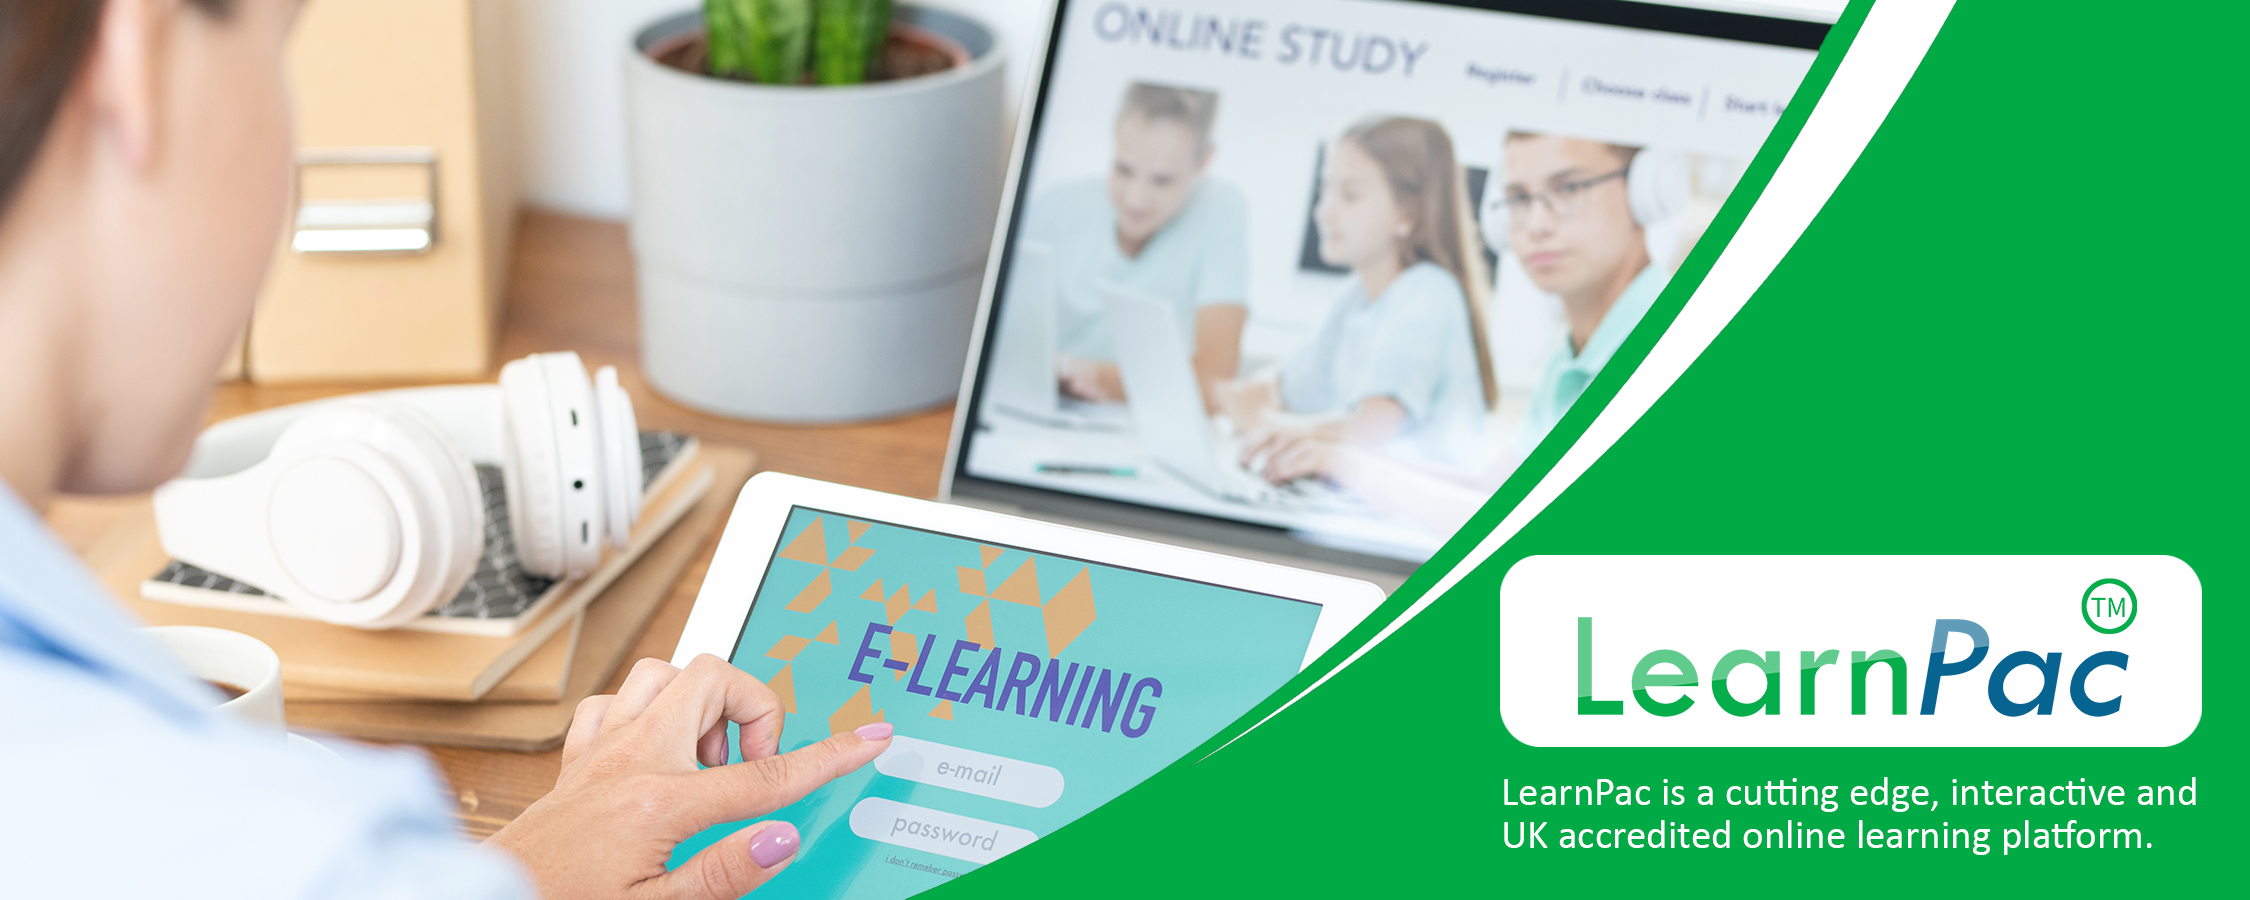 Mandatory Training for Care Assistants - Online Learning Courses - E-Learning Courses - LearnPac Systems UK -